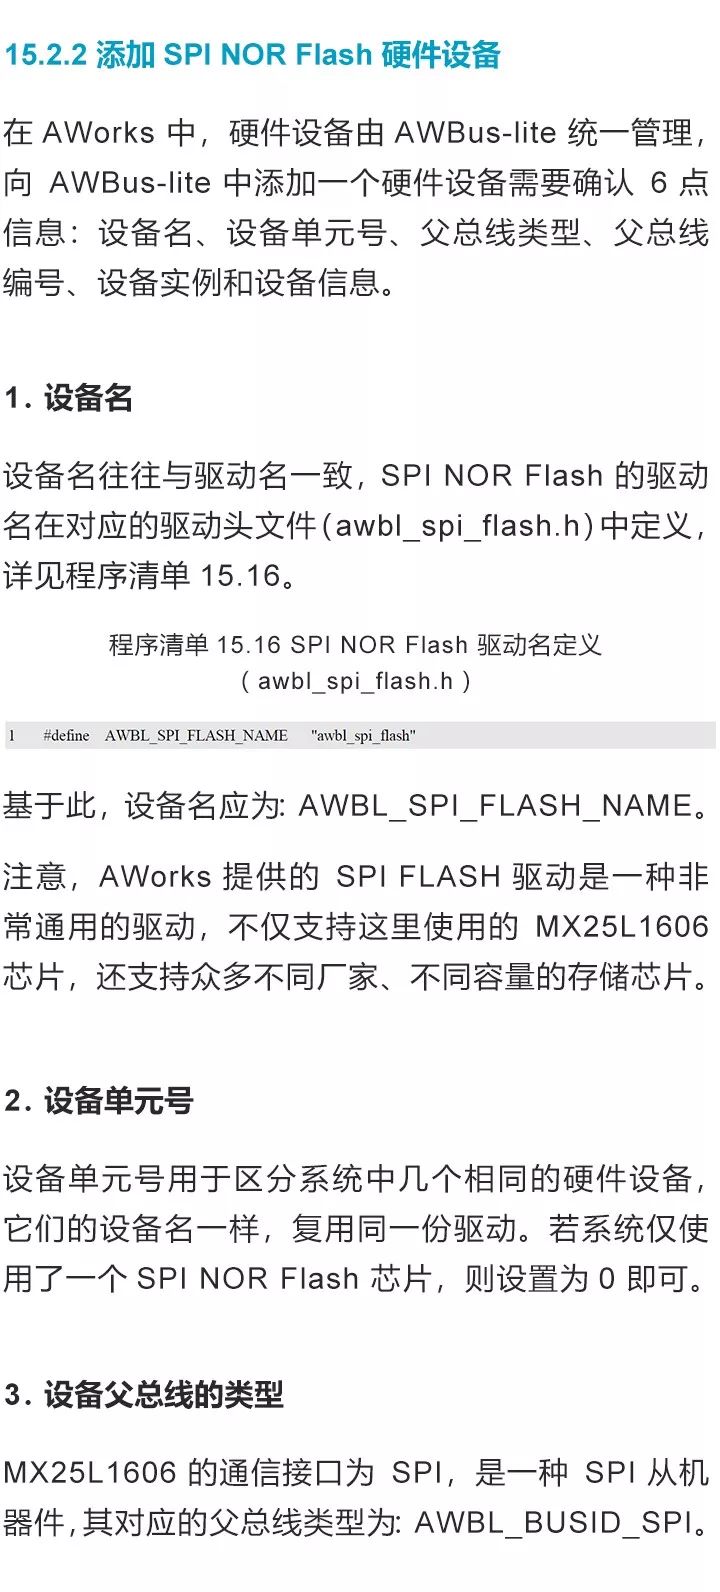 AWorks常用外围器件EEPROM和SPI Nor Flash存储器软件的详细资料概述